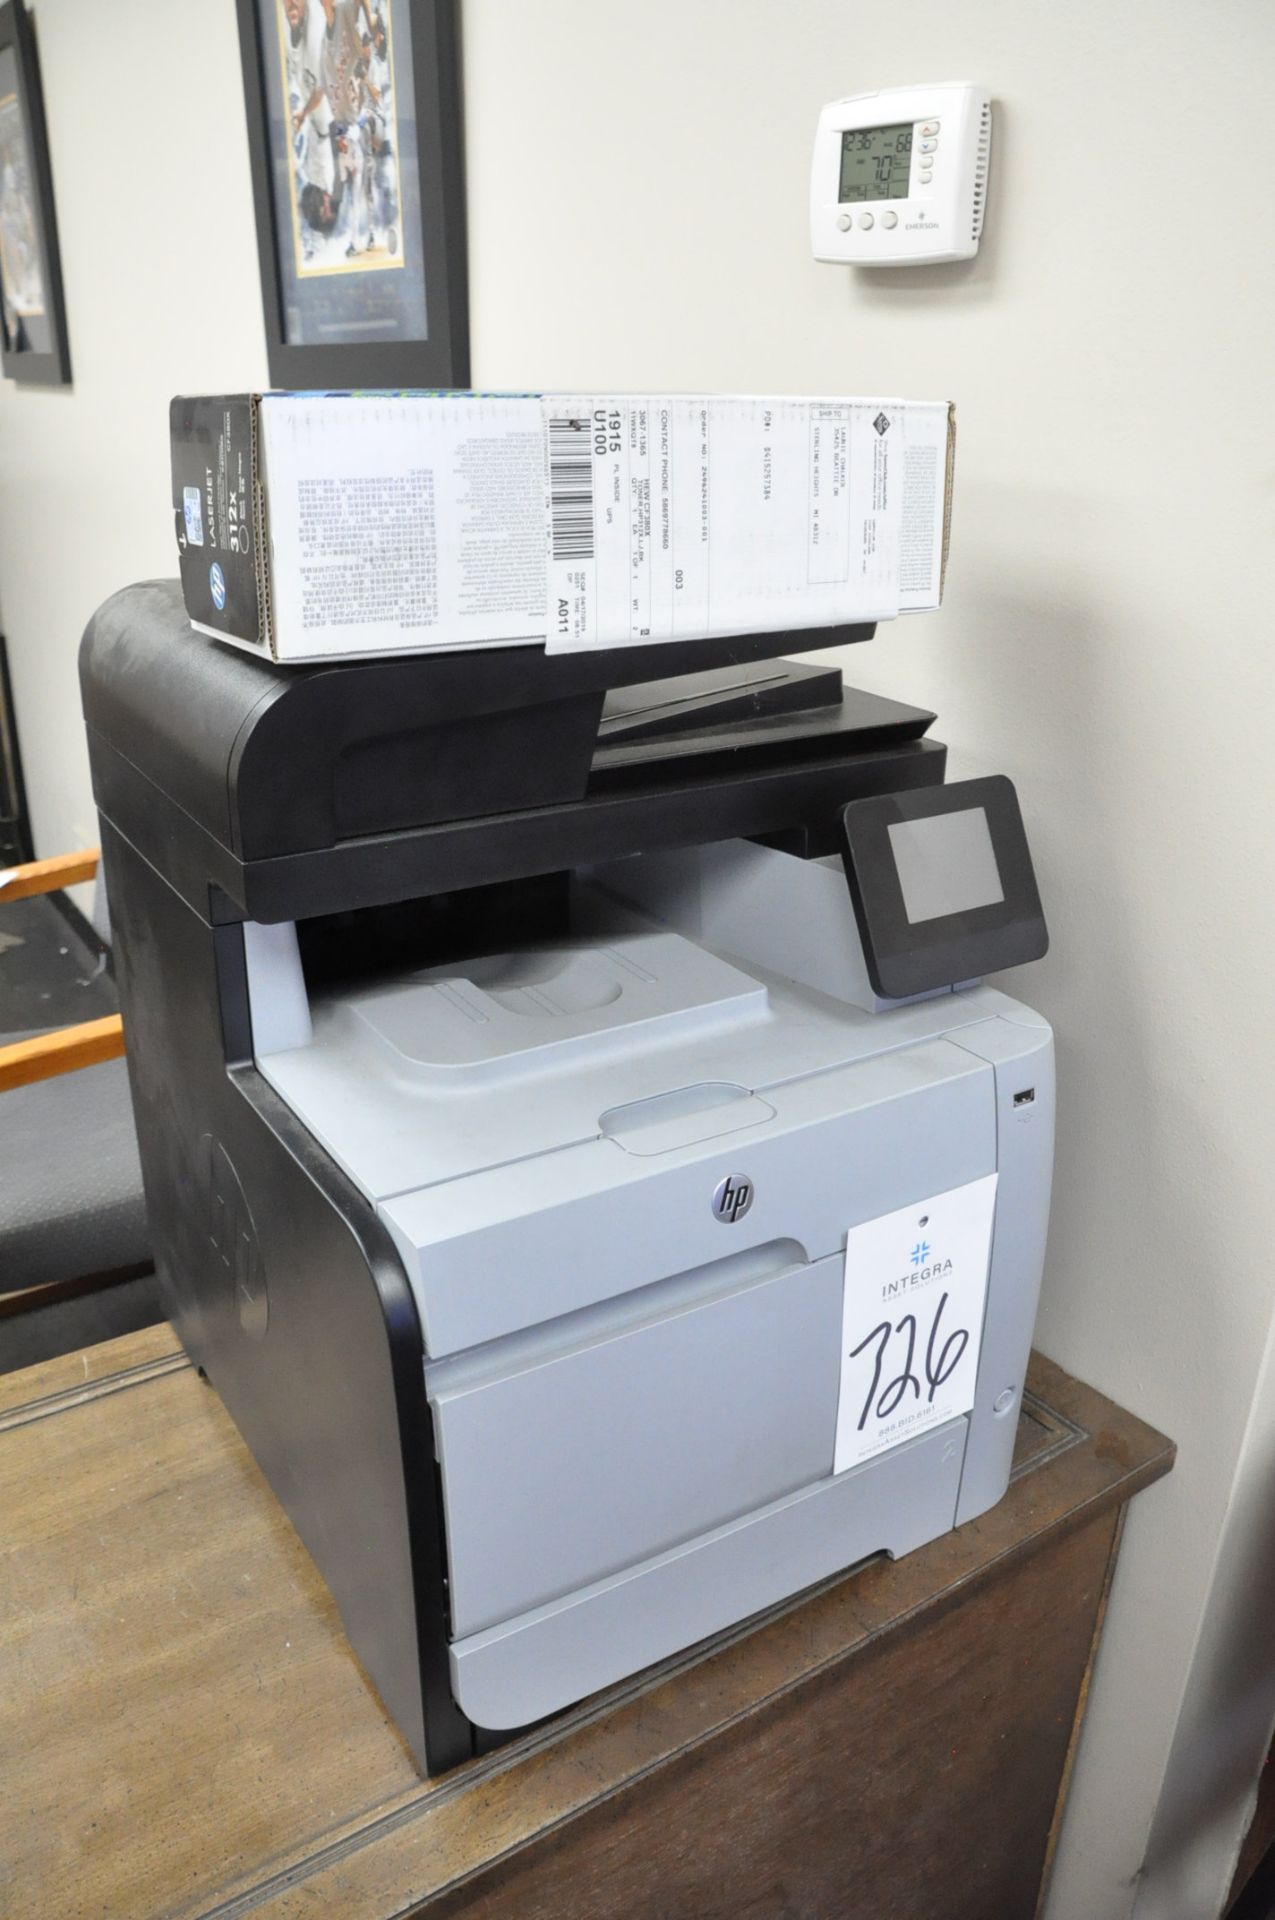 Hewlett Packard Multi Function Printer